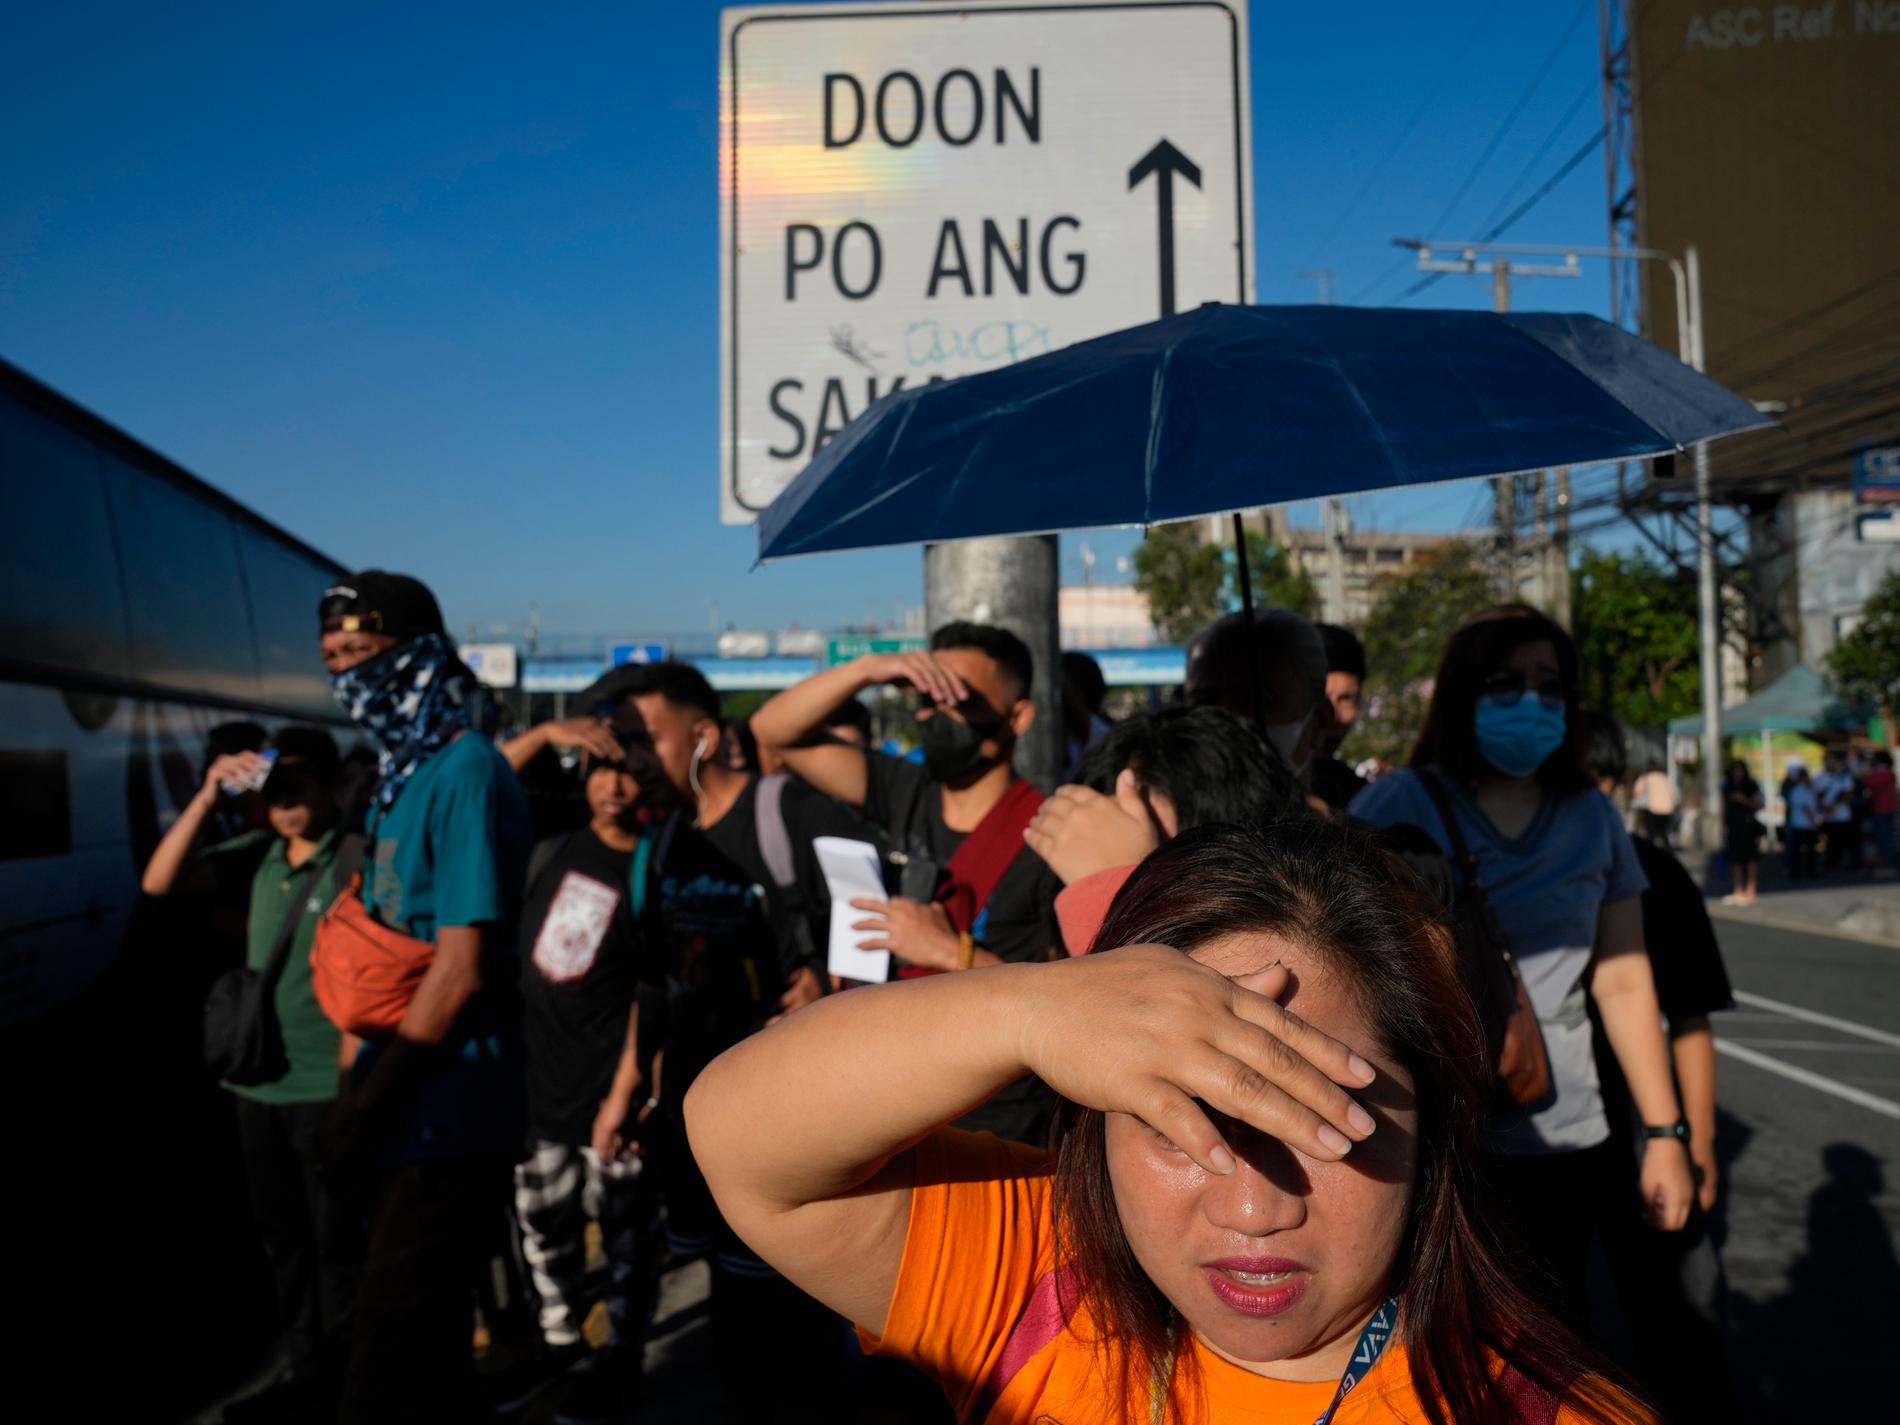 Extrem hetta i Asien: "Farligt – stanna inne"